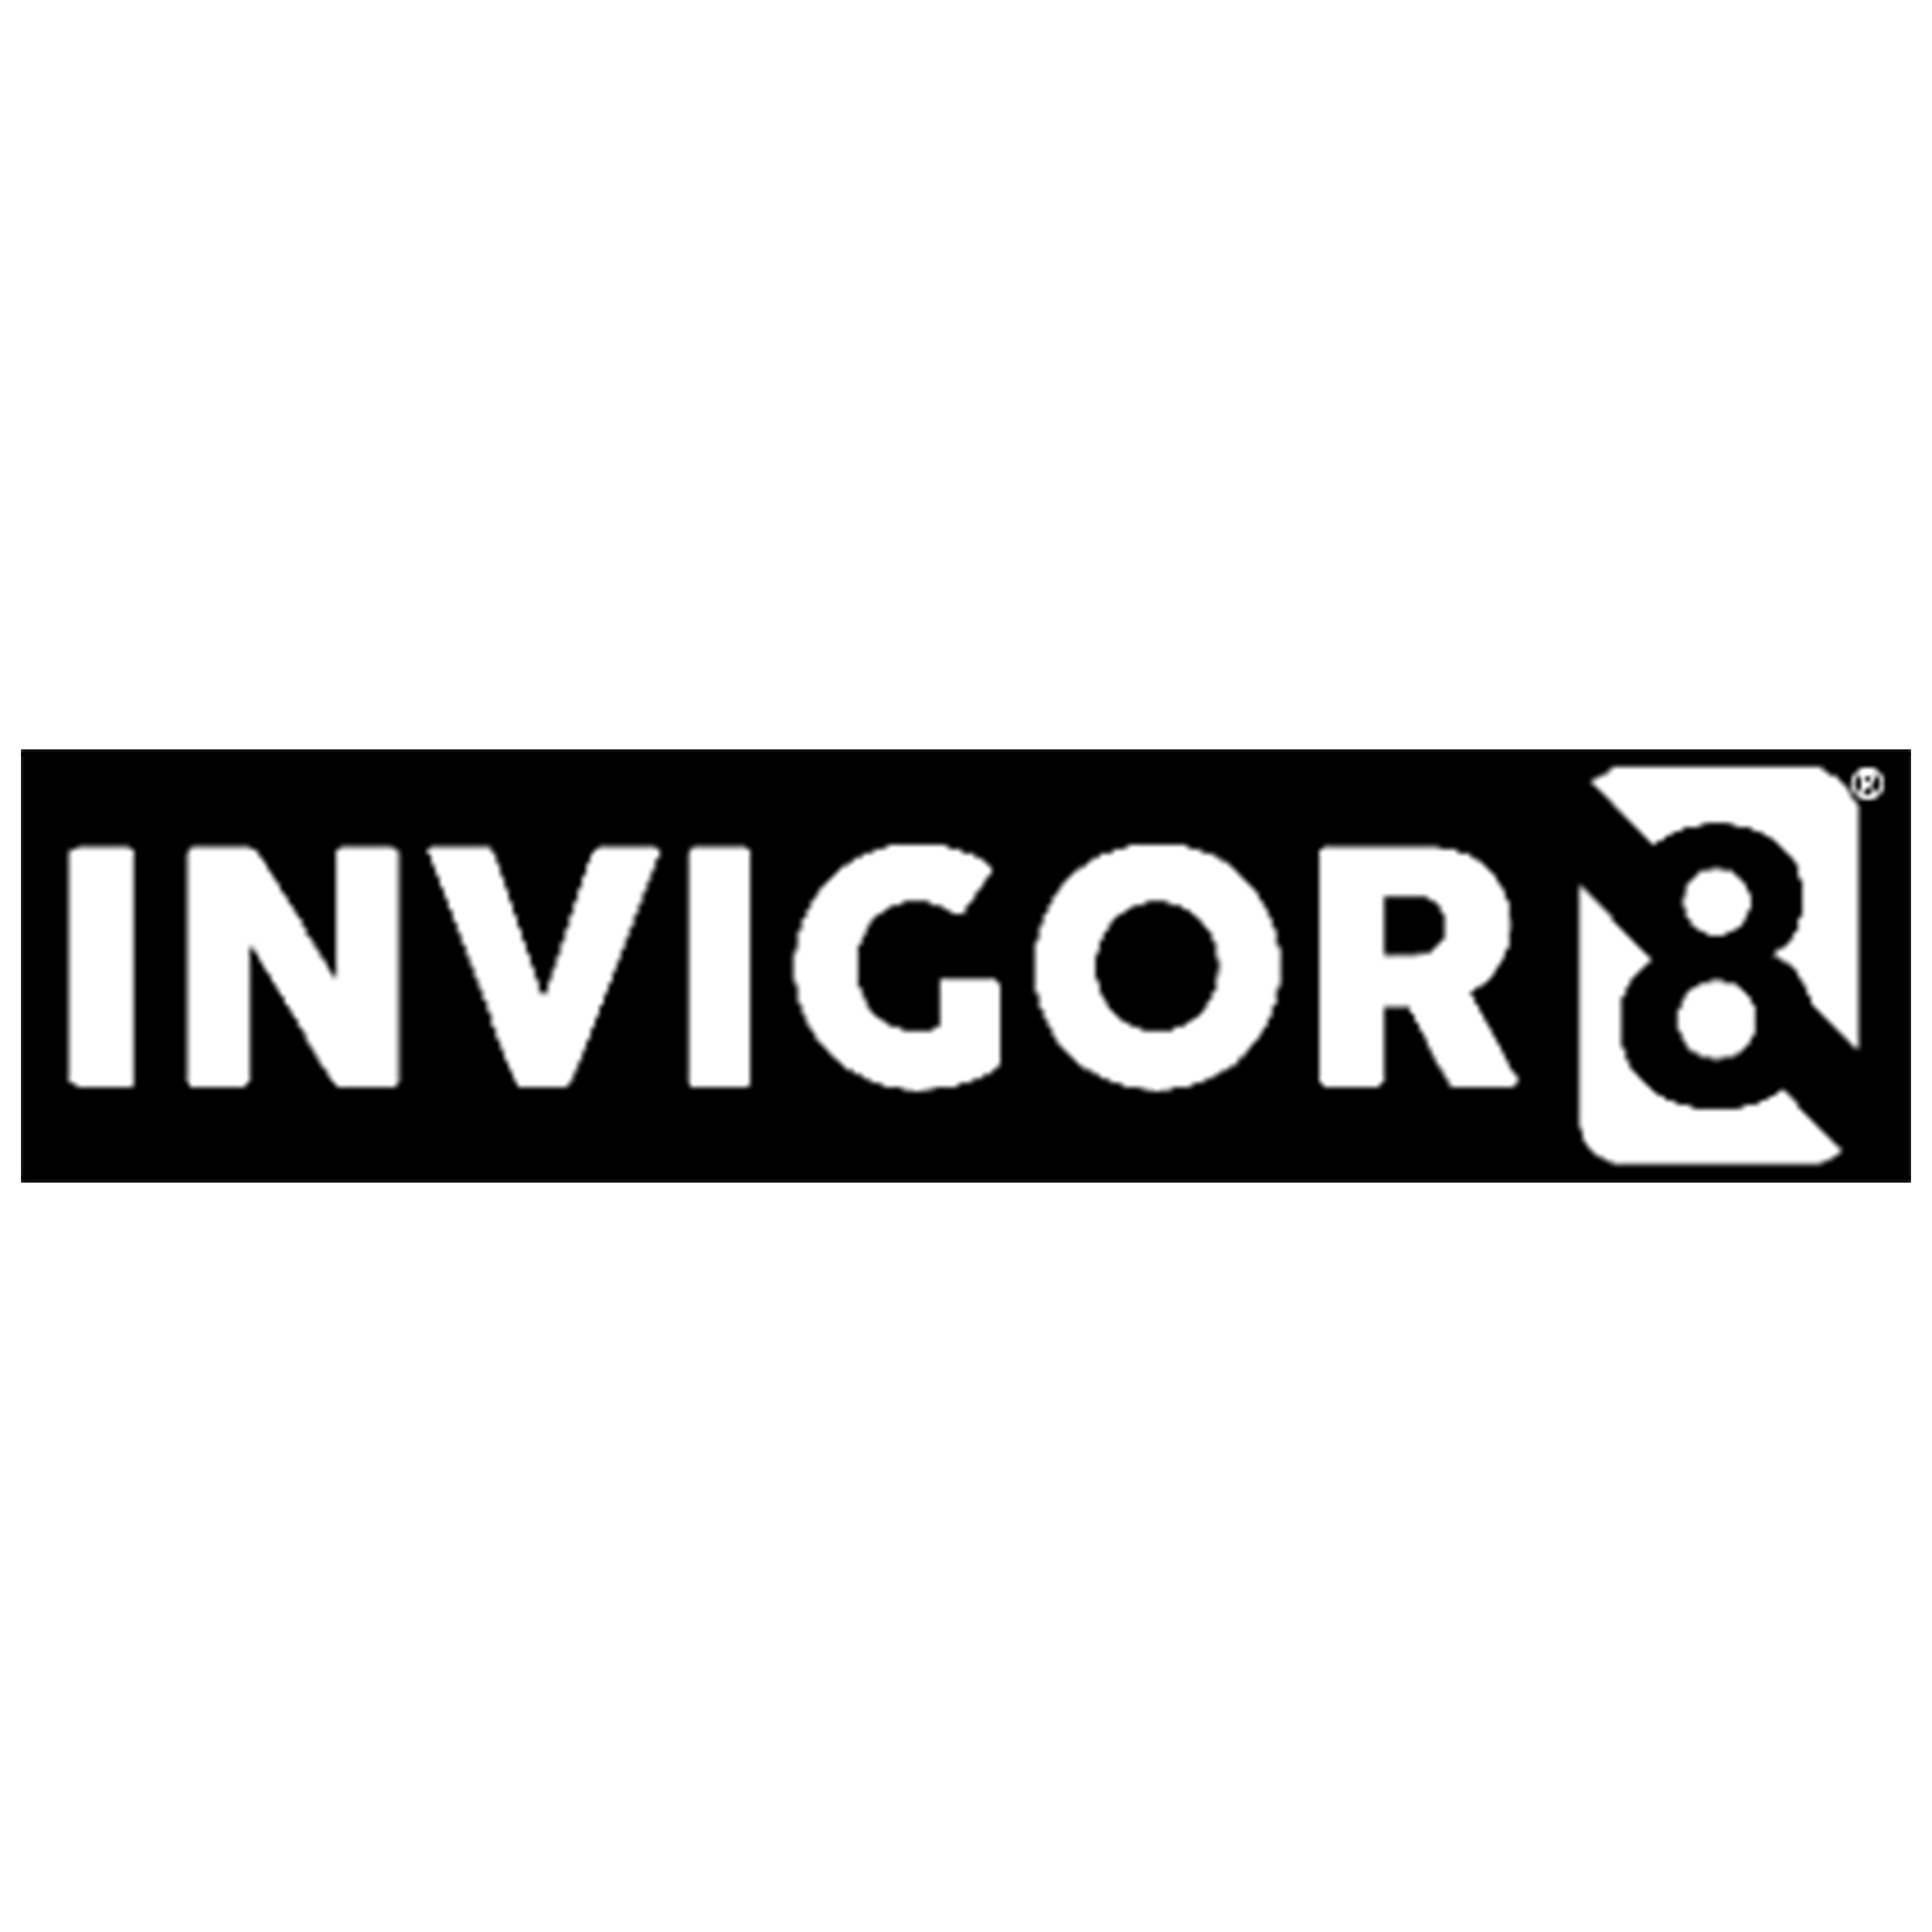 Invigor8 logo